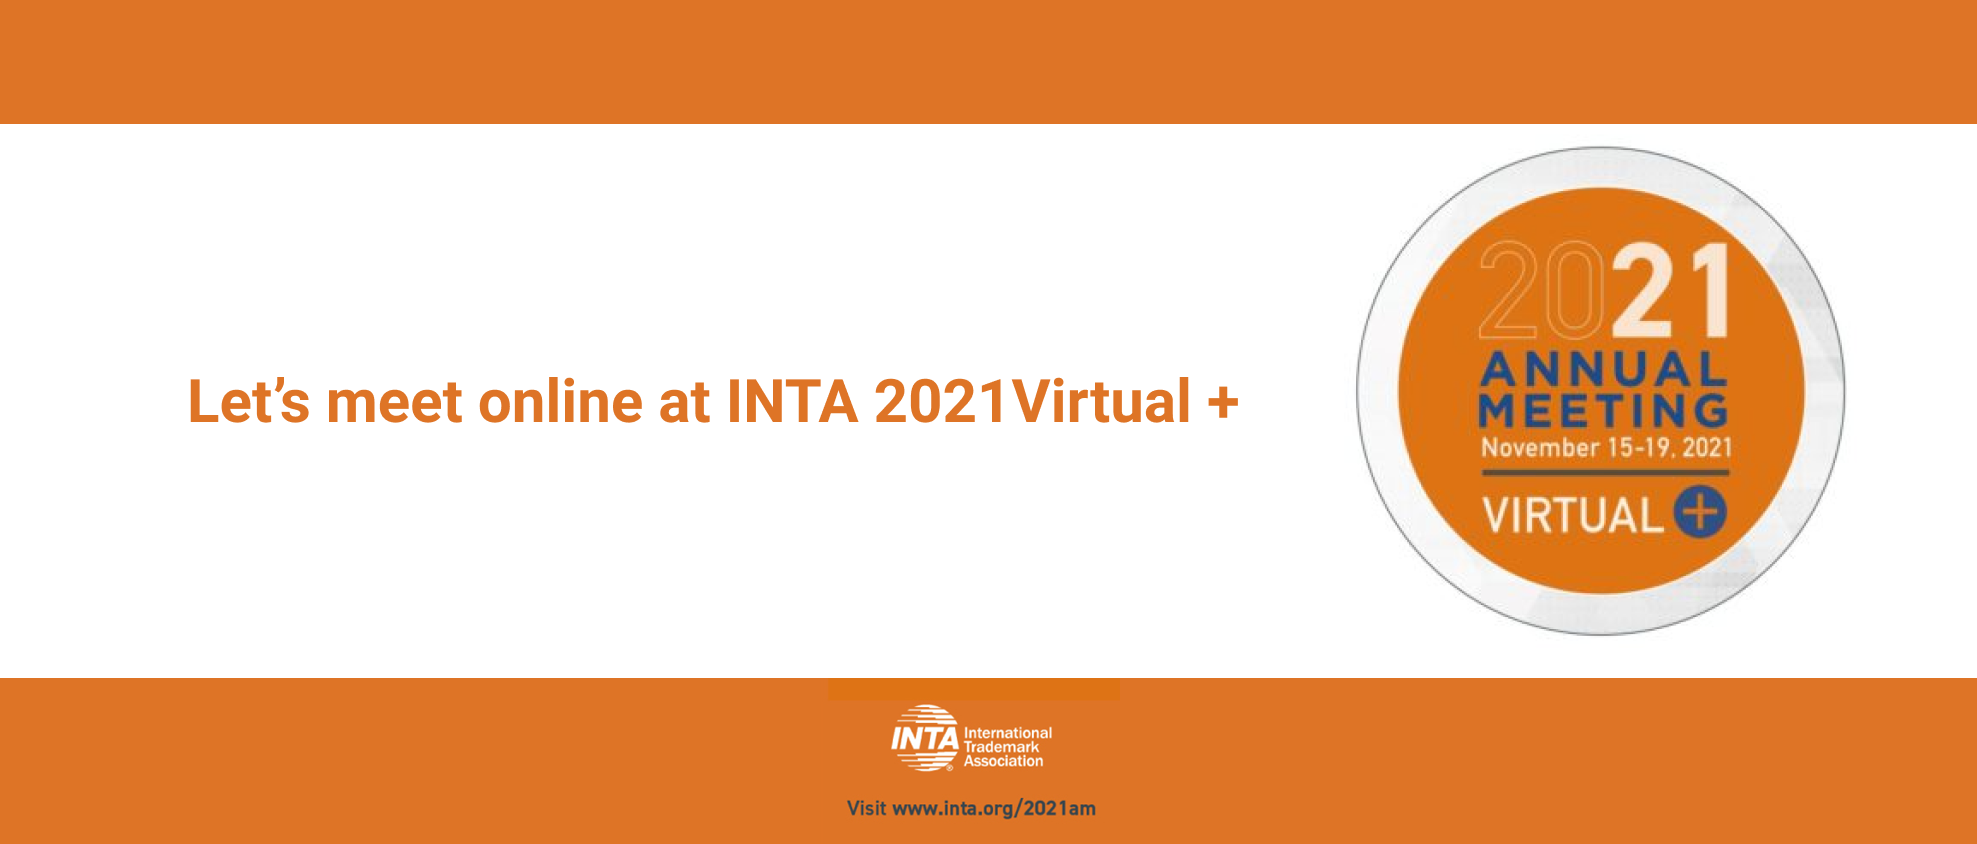 INTA Annual Meeting Virtual + reopens the doors